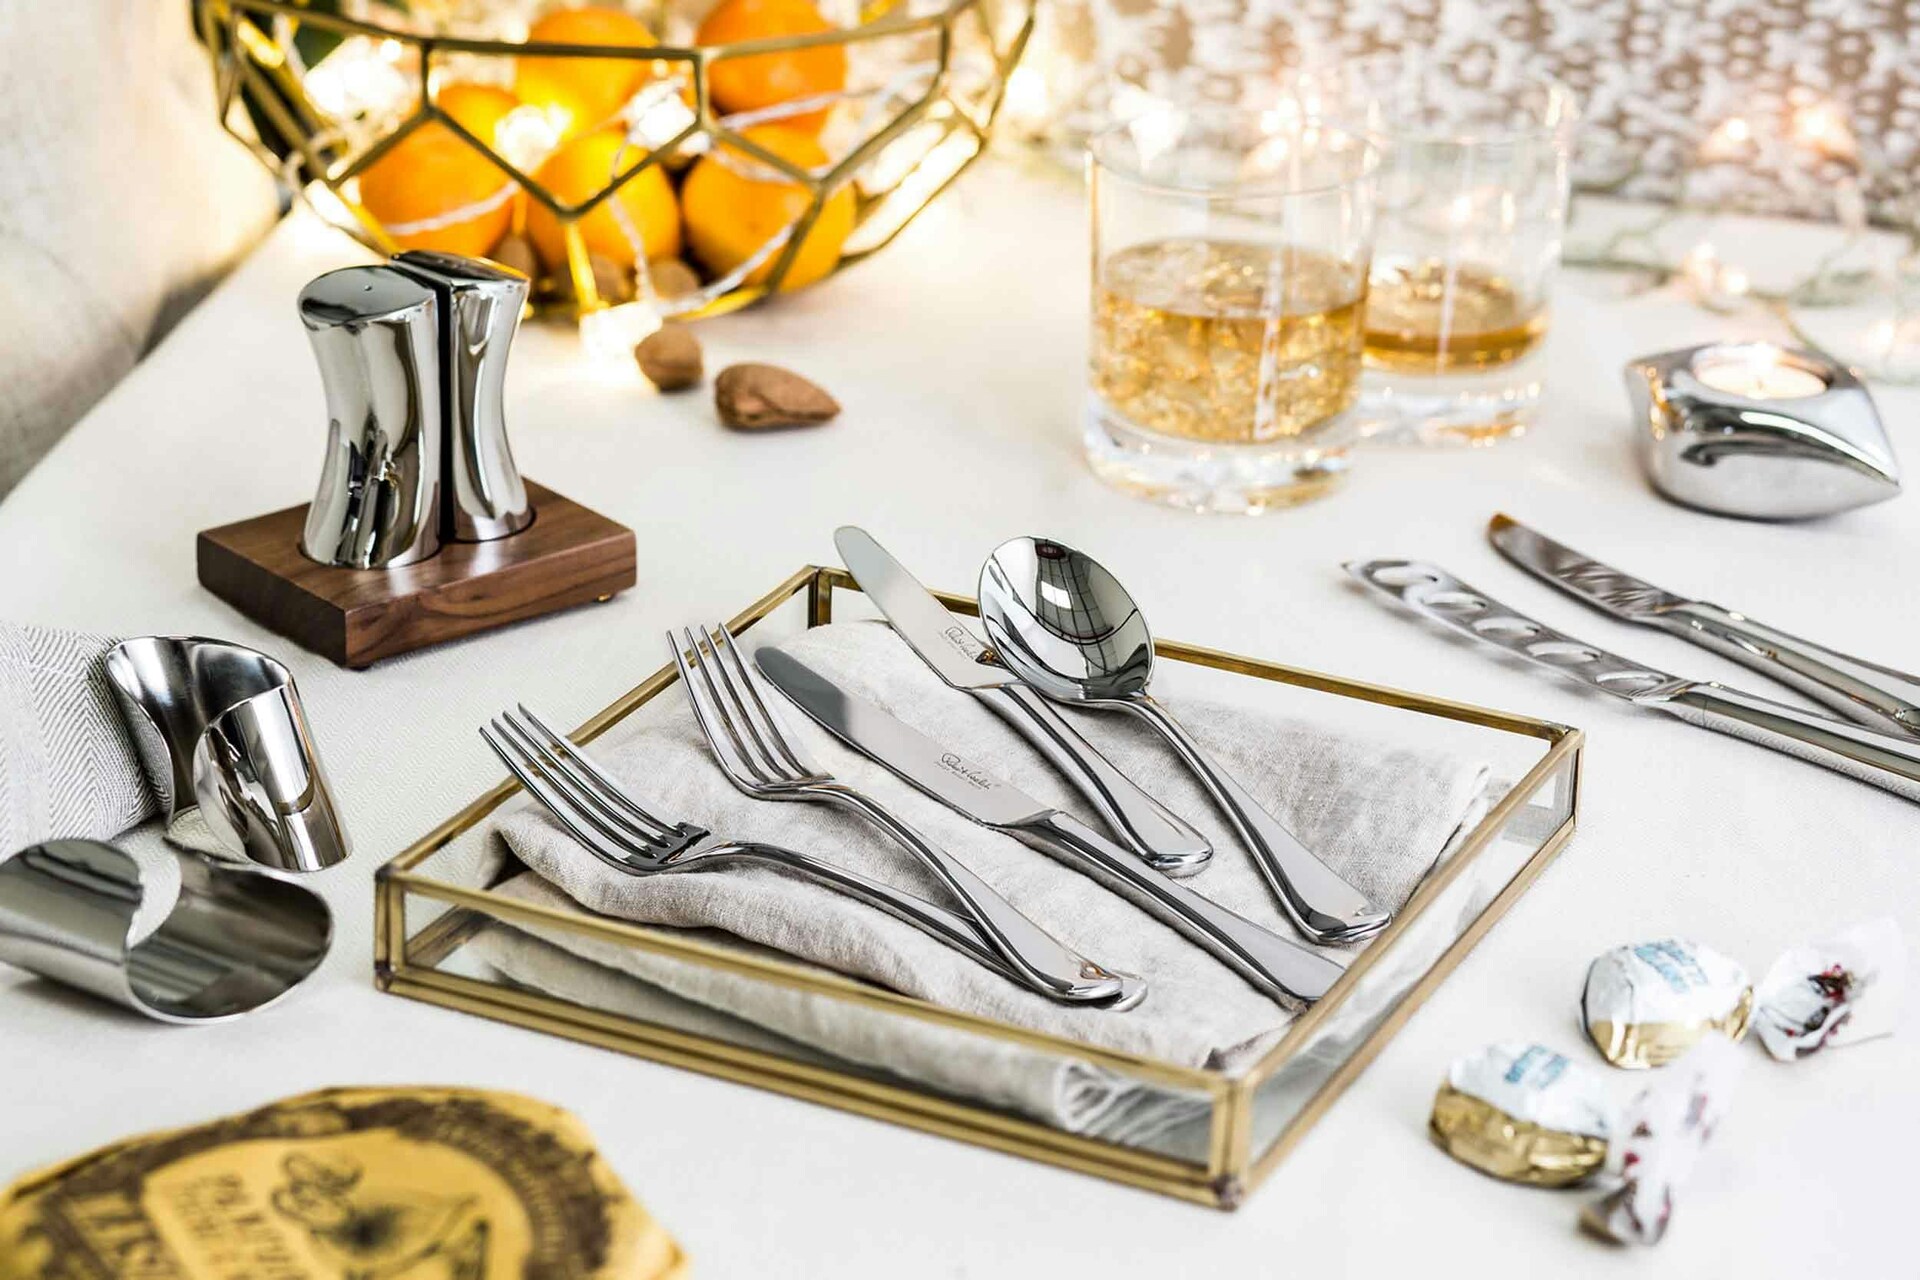 https://royaldesign.com/image/2/robert-welch-radford-cutlery-set-42-piece-4